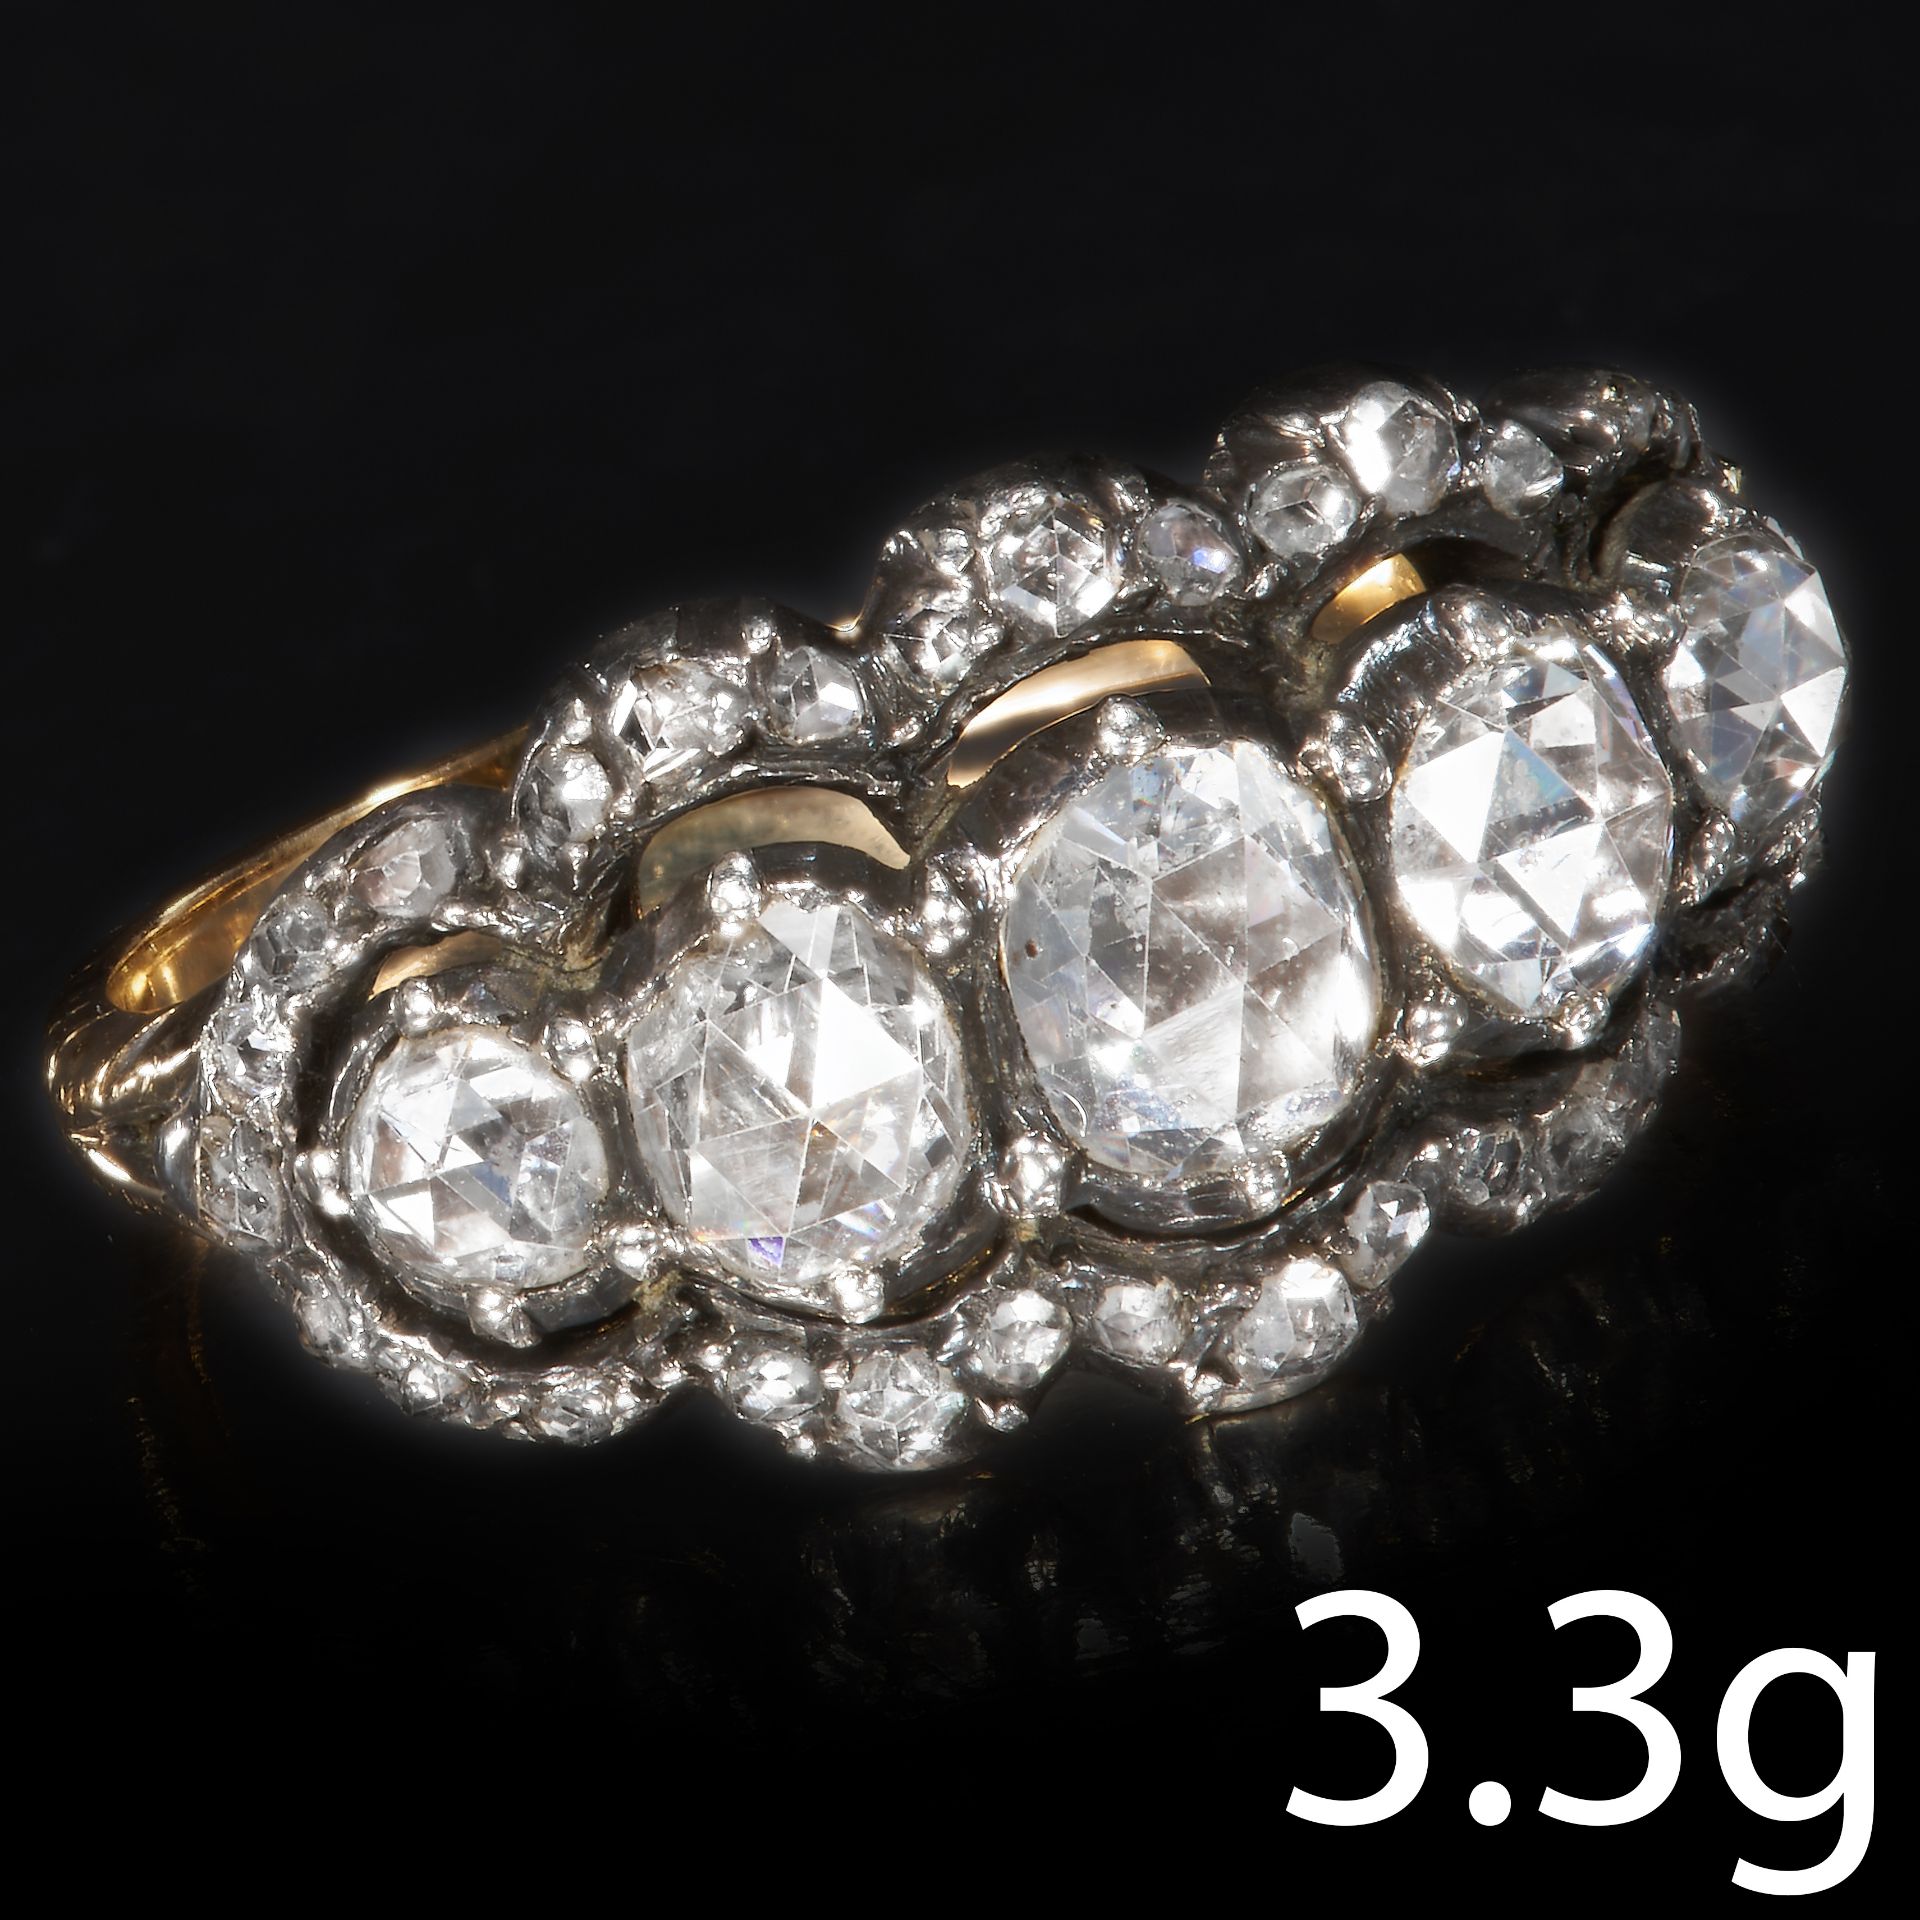 ANTIQUE DIAMOND RING